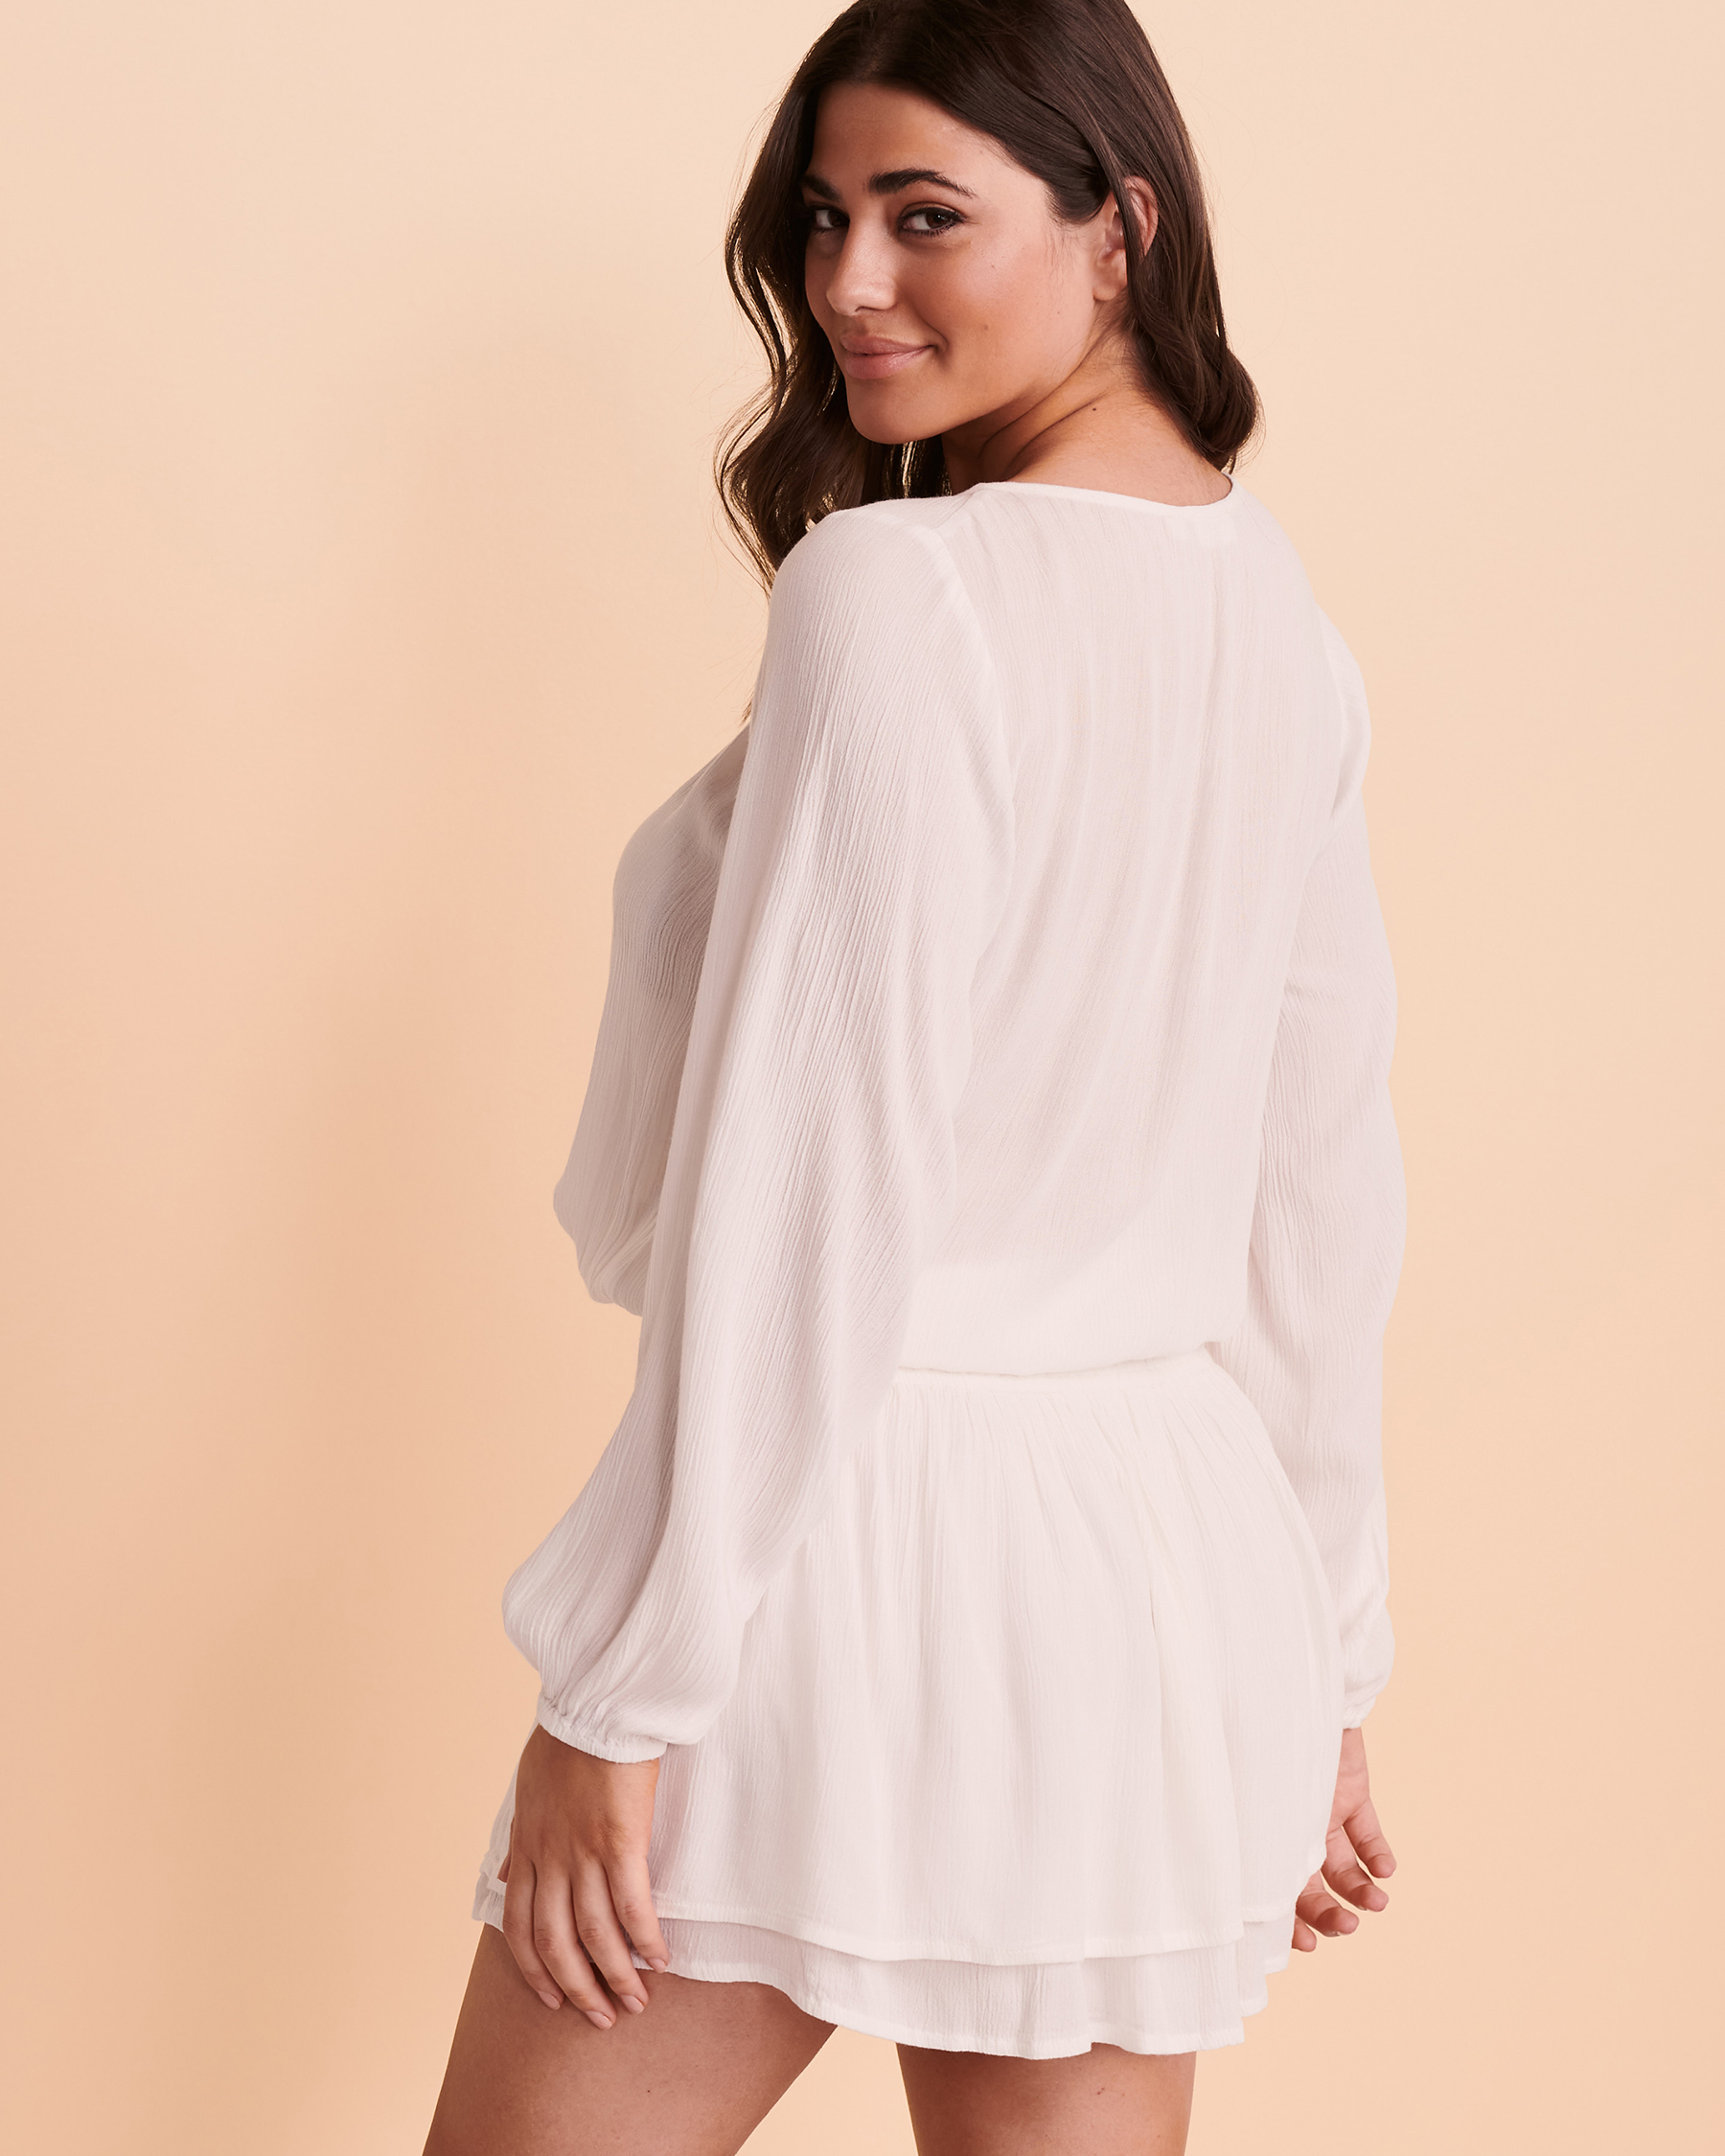 KOY RESORT MIAMI Long Sleeve Dress White K2277 - View2